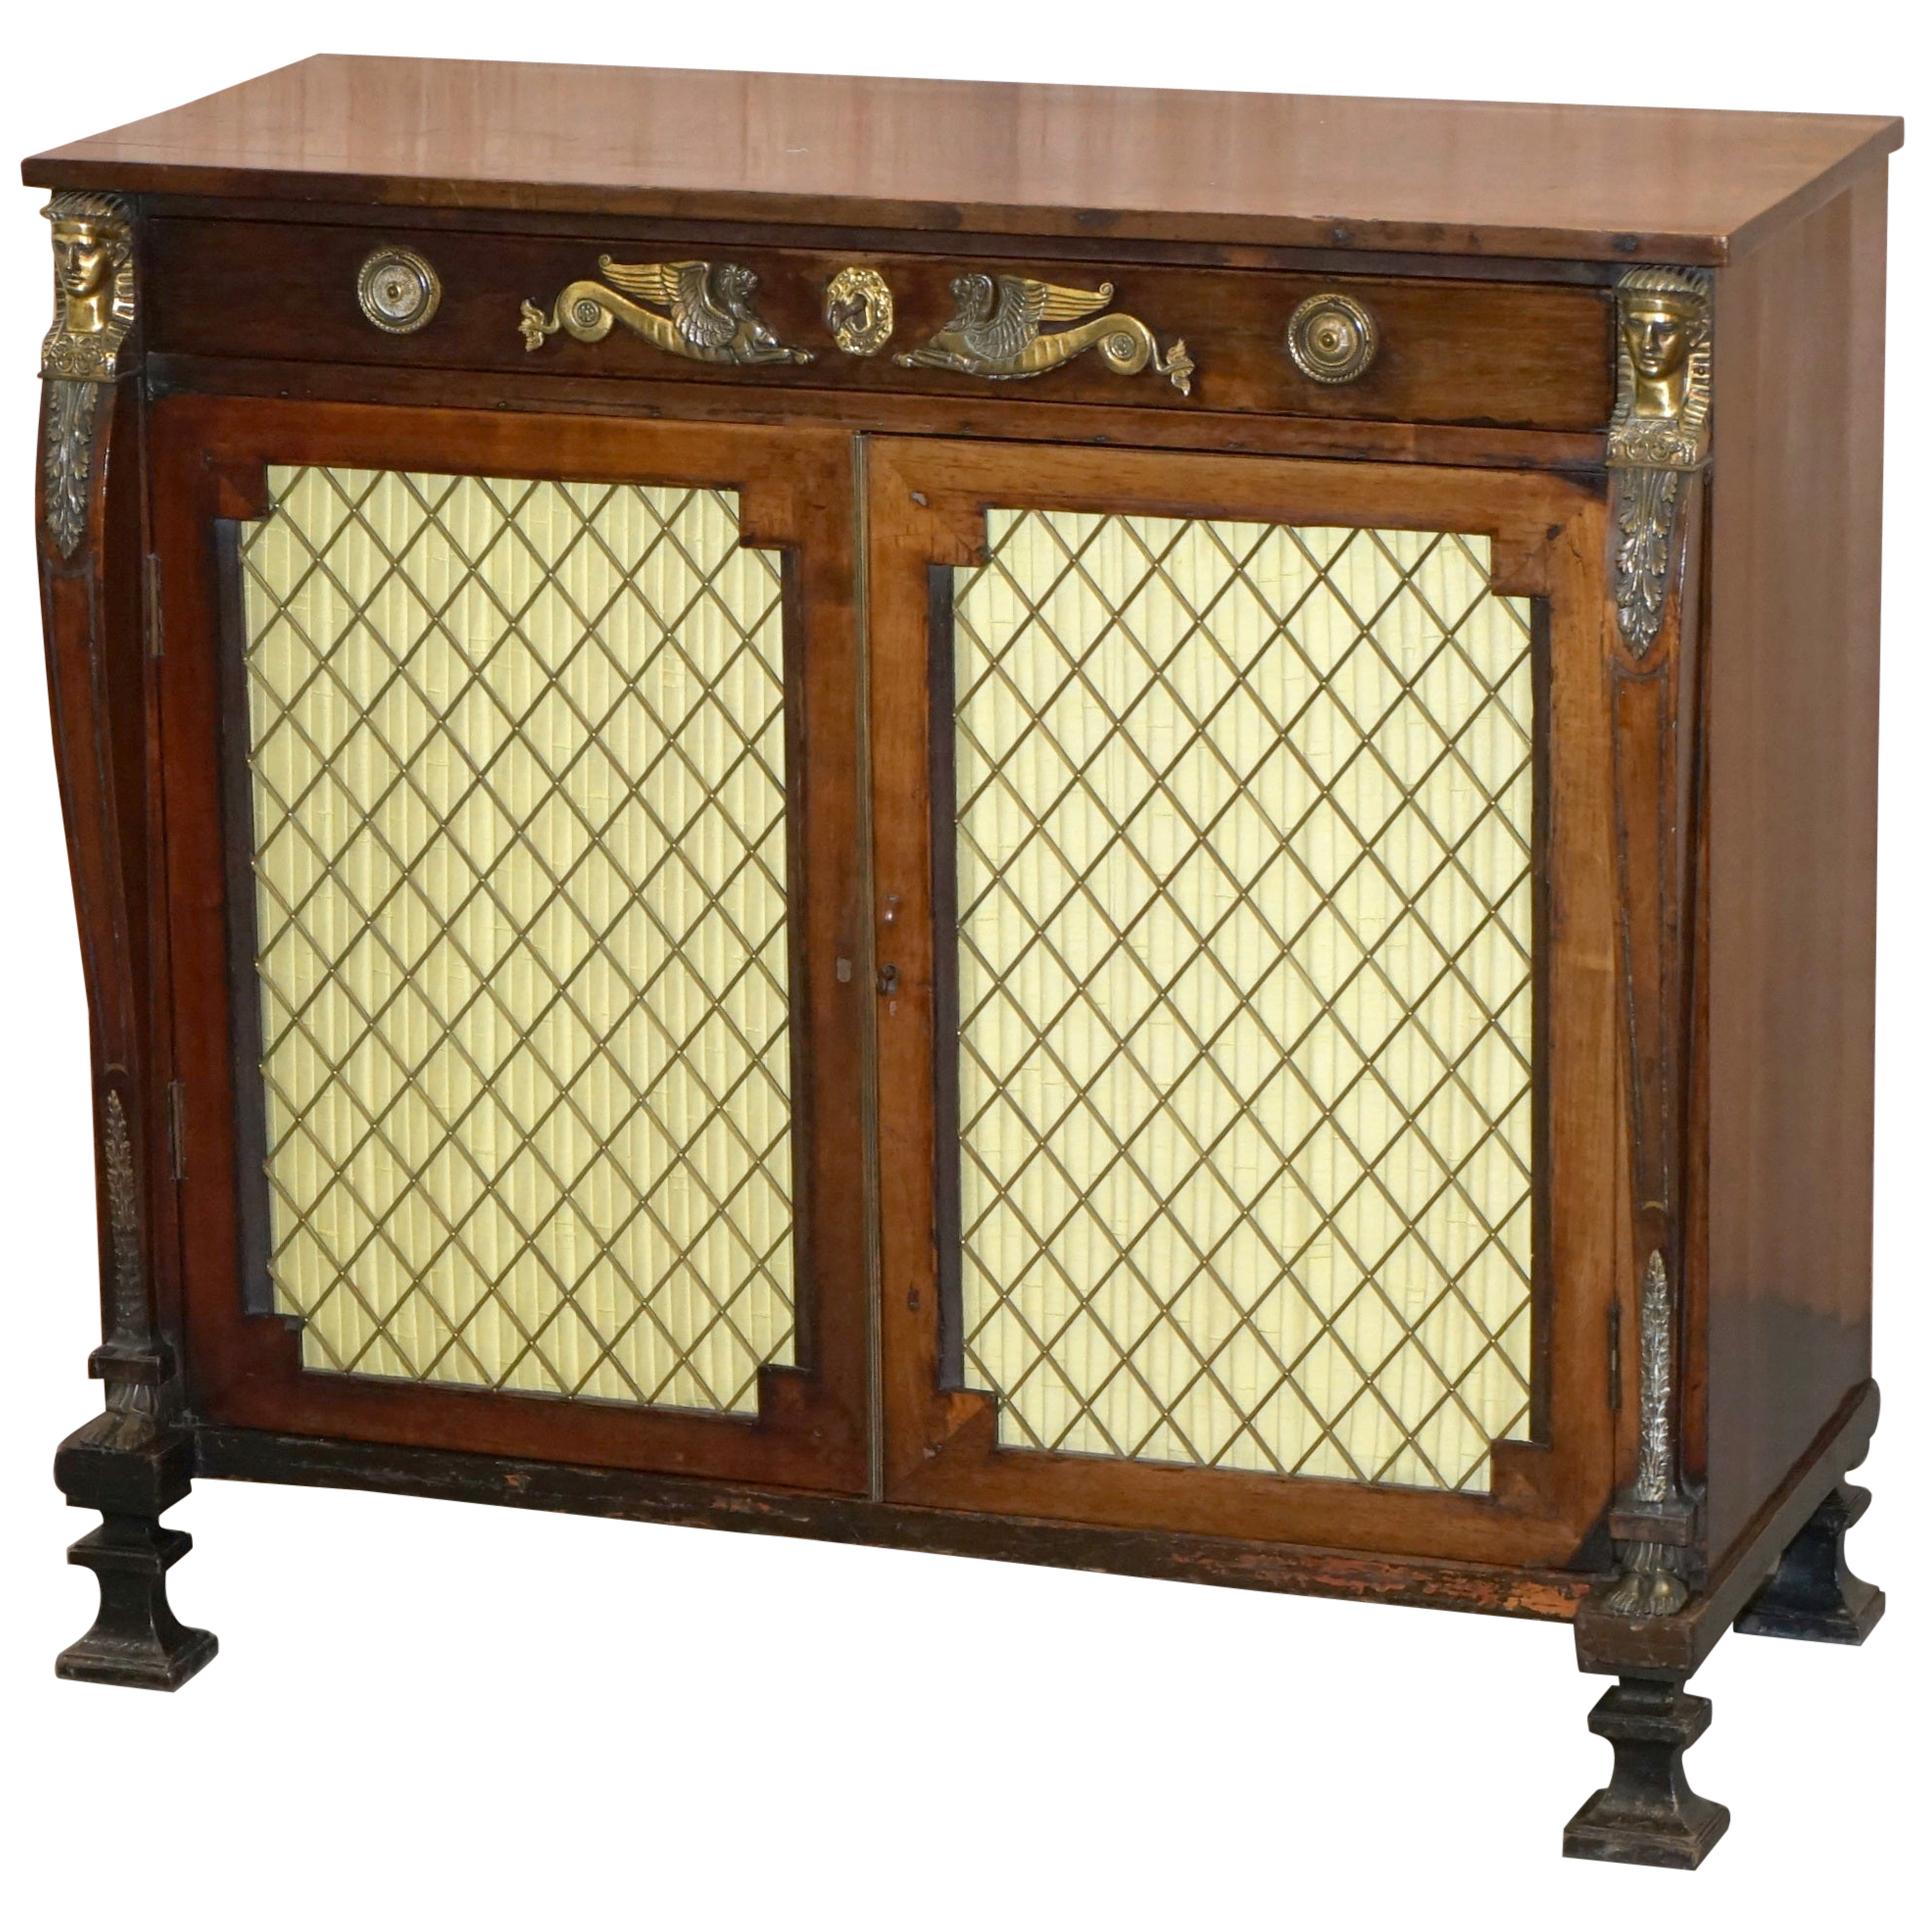 Original Regency Hardwood Egyptian Revival Ormolu-Mounted Sideboard Cupboard